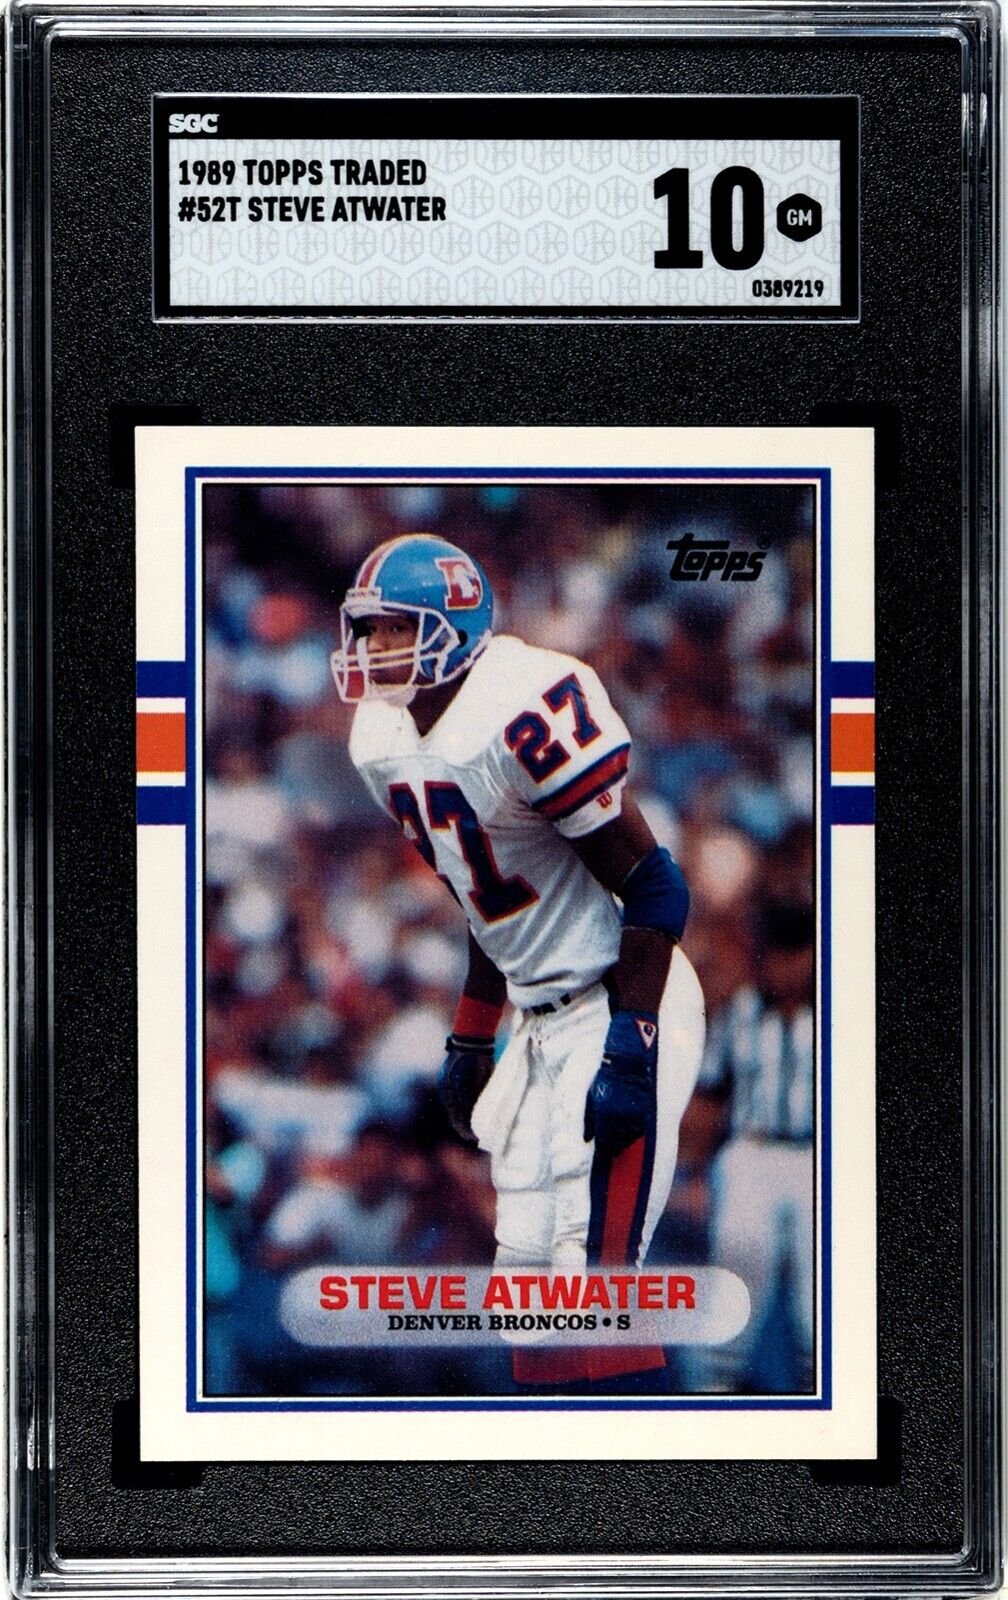 1989 Topps Traded Steve Atwater RC #52T SGC 10 Gem Mint Denver Broncos